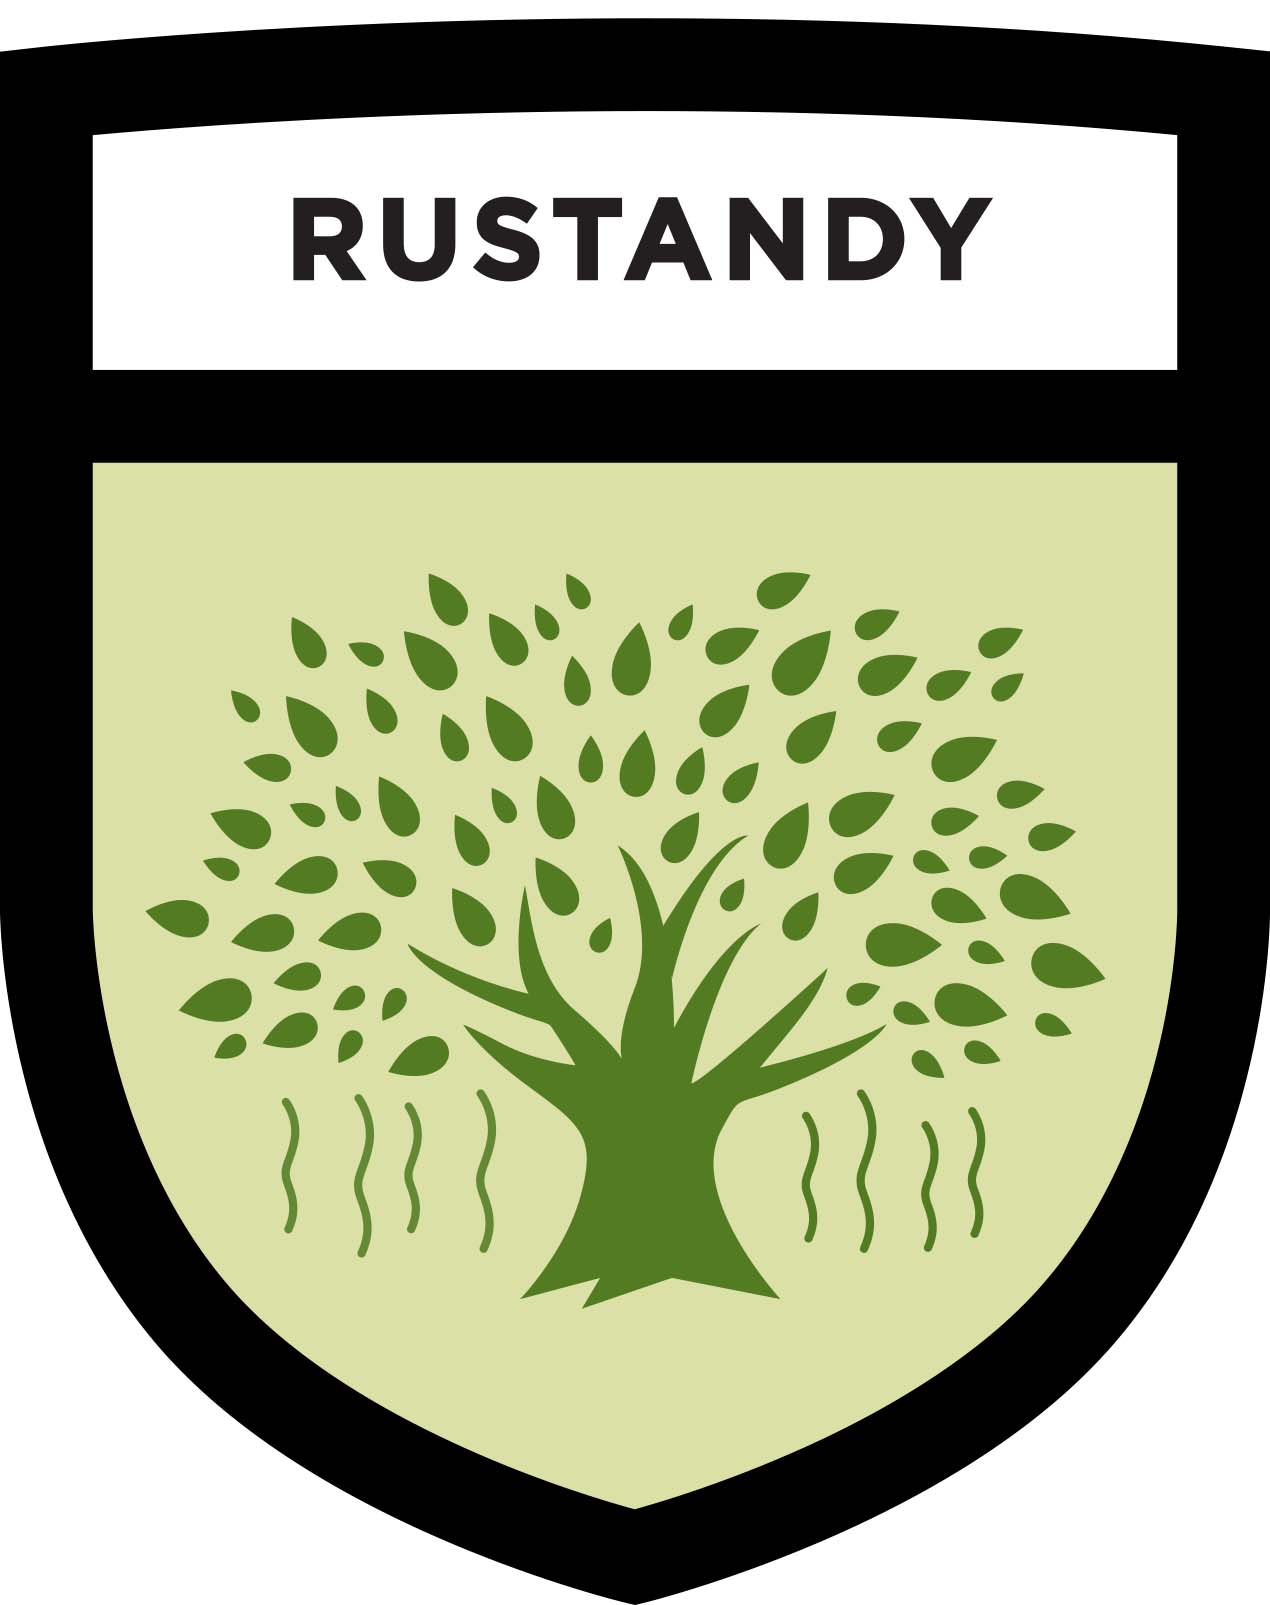 Rustandy Shield